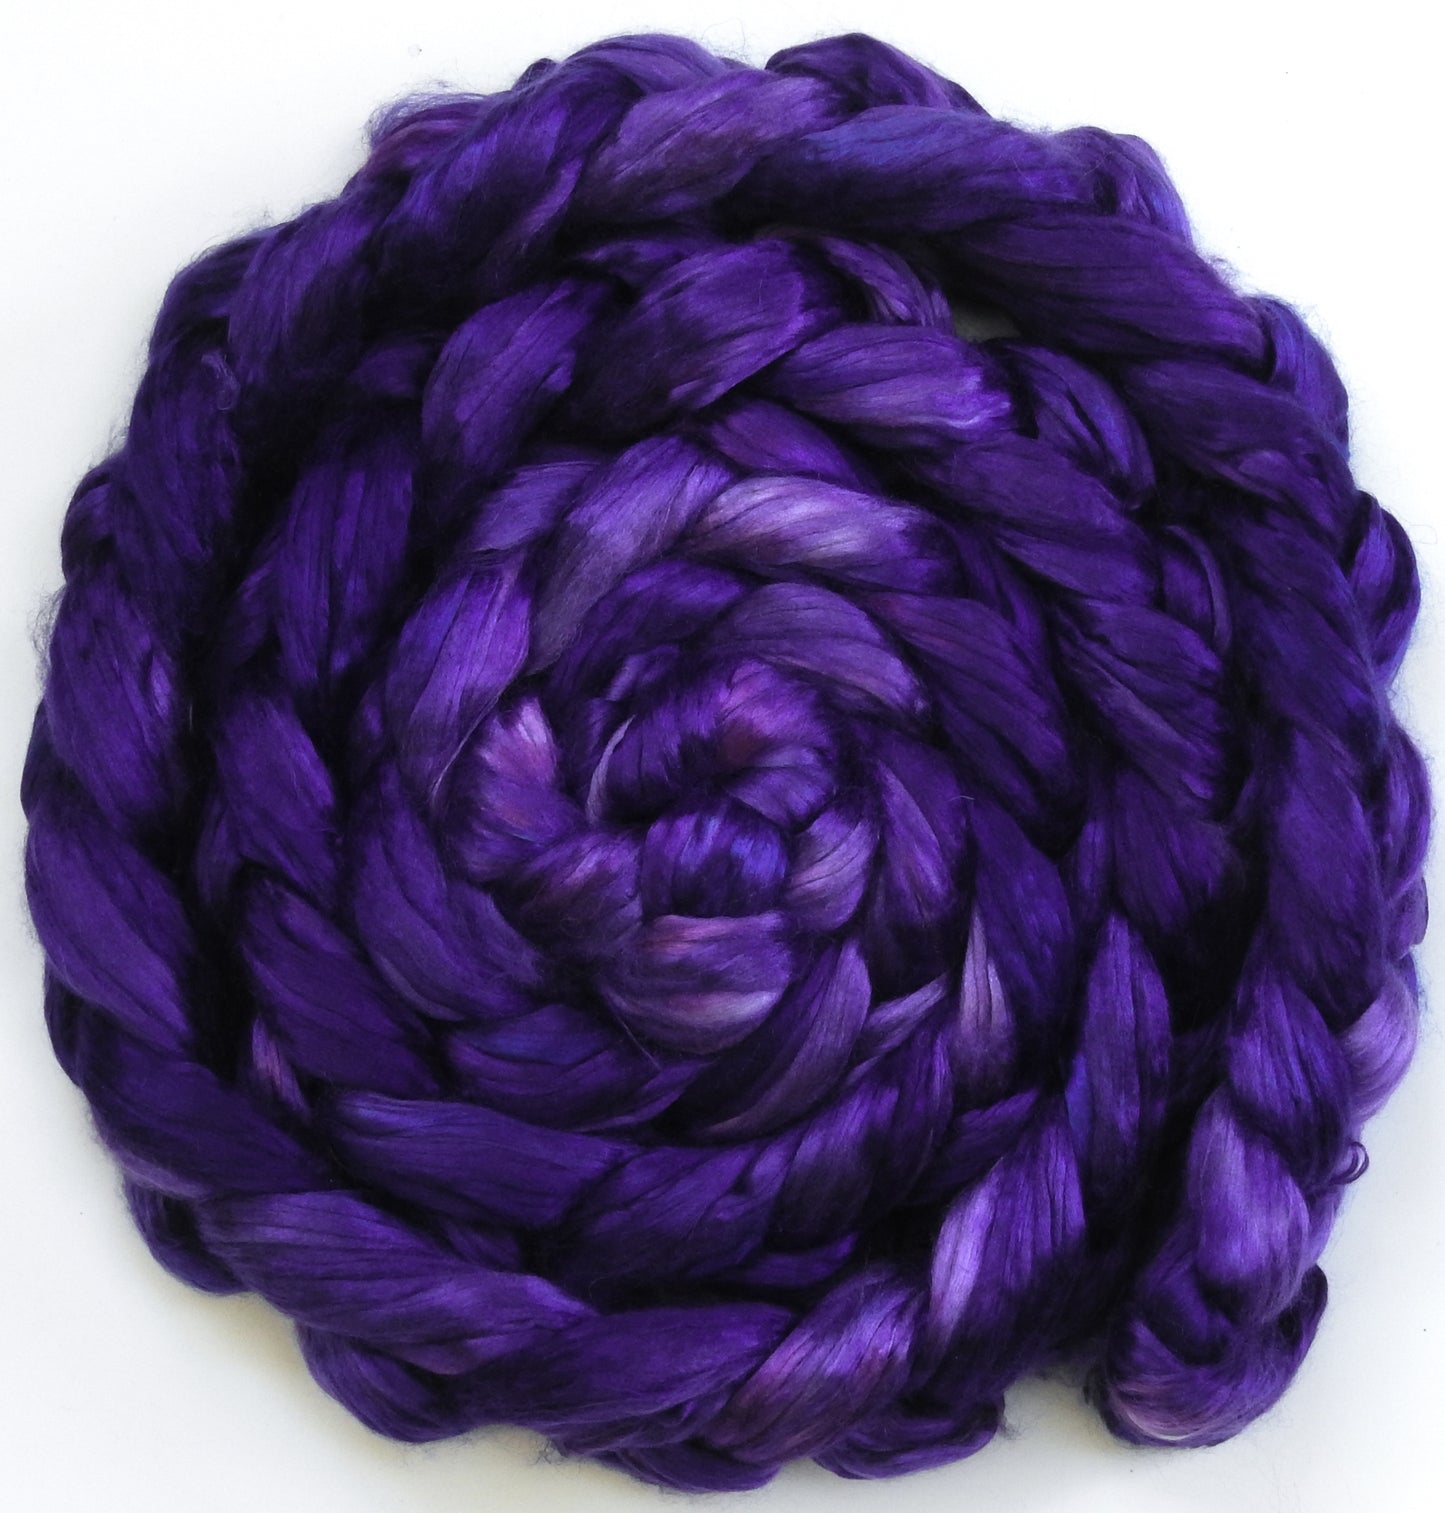 Violet Anemone - (4.2 oz)100% Mulberry Silk